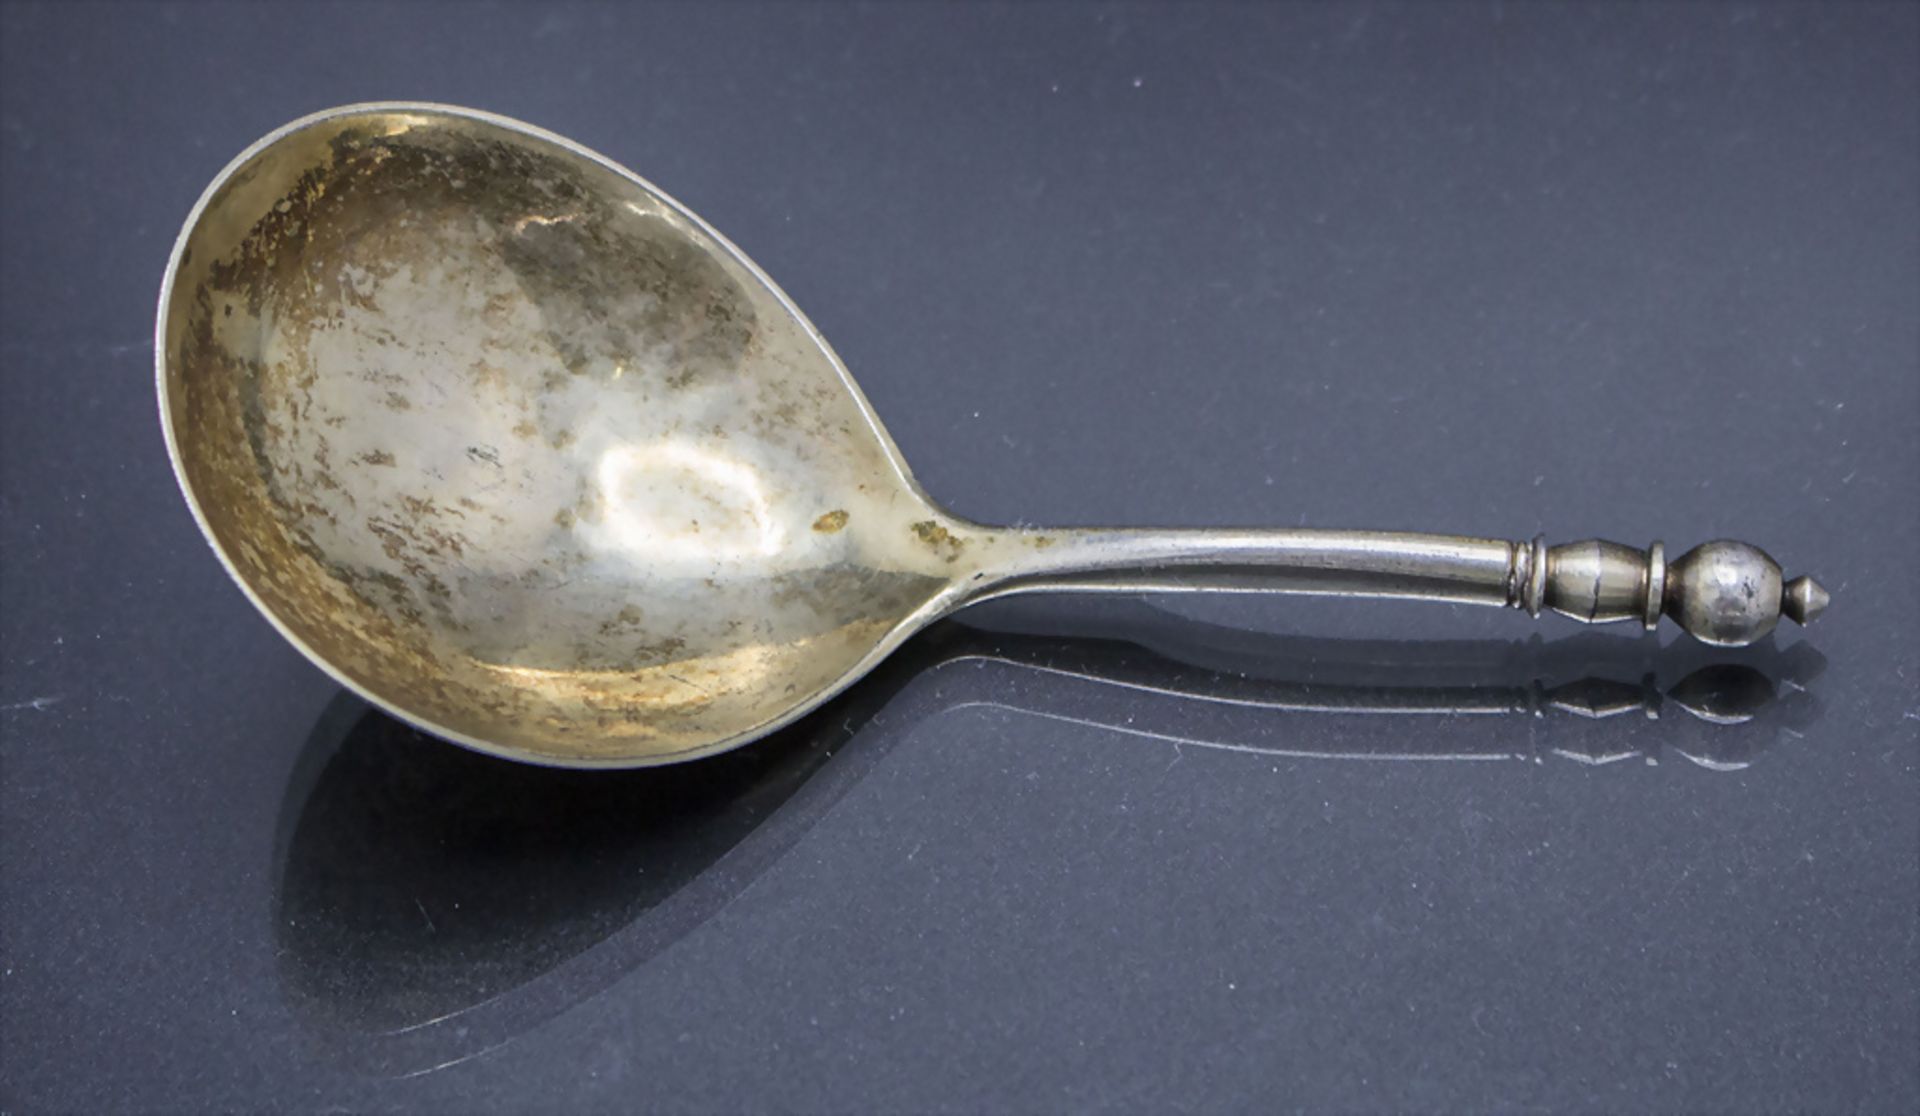 Kowsch / A silver Vodka spoon / kovsh, Moskau/Moscow, 1832